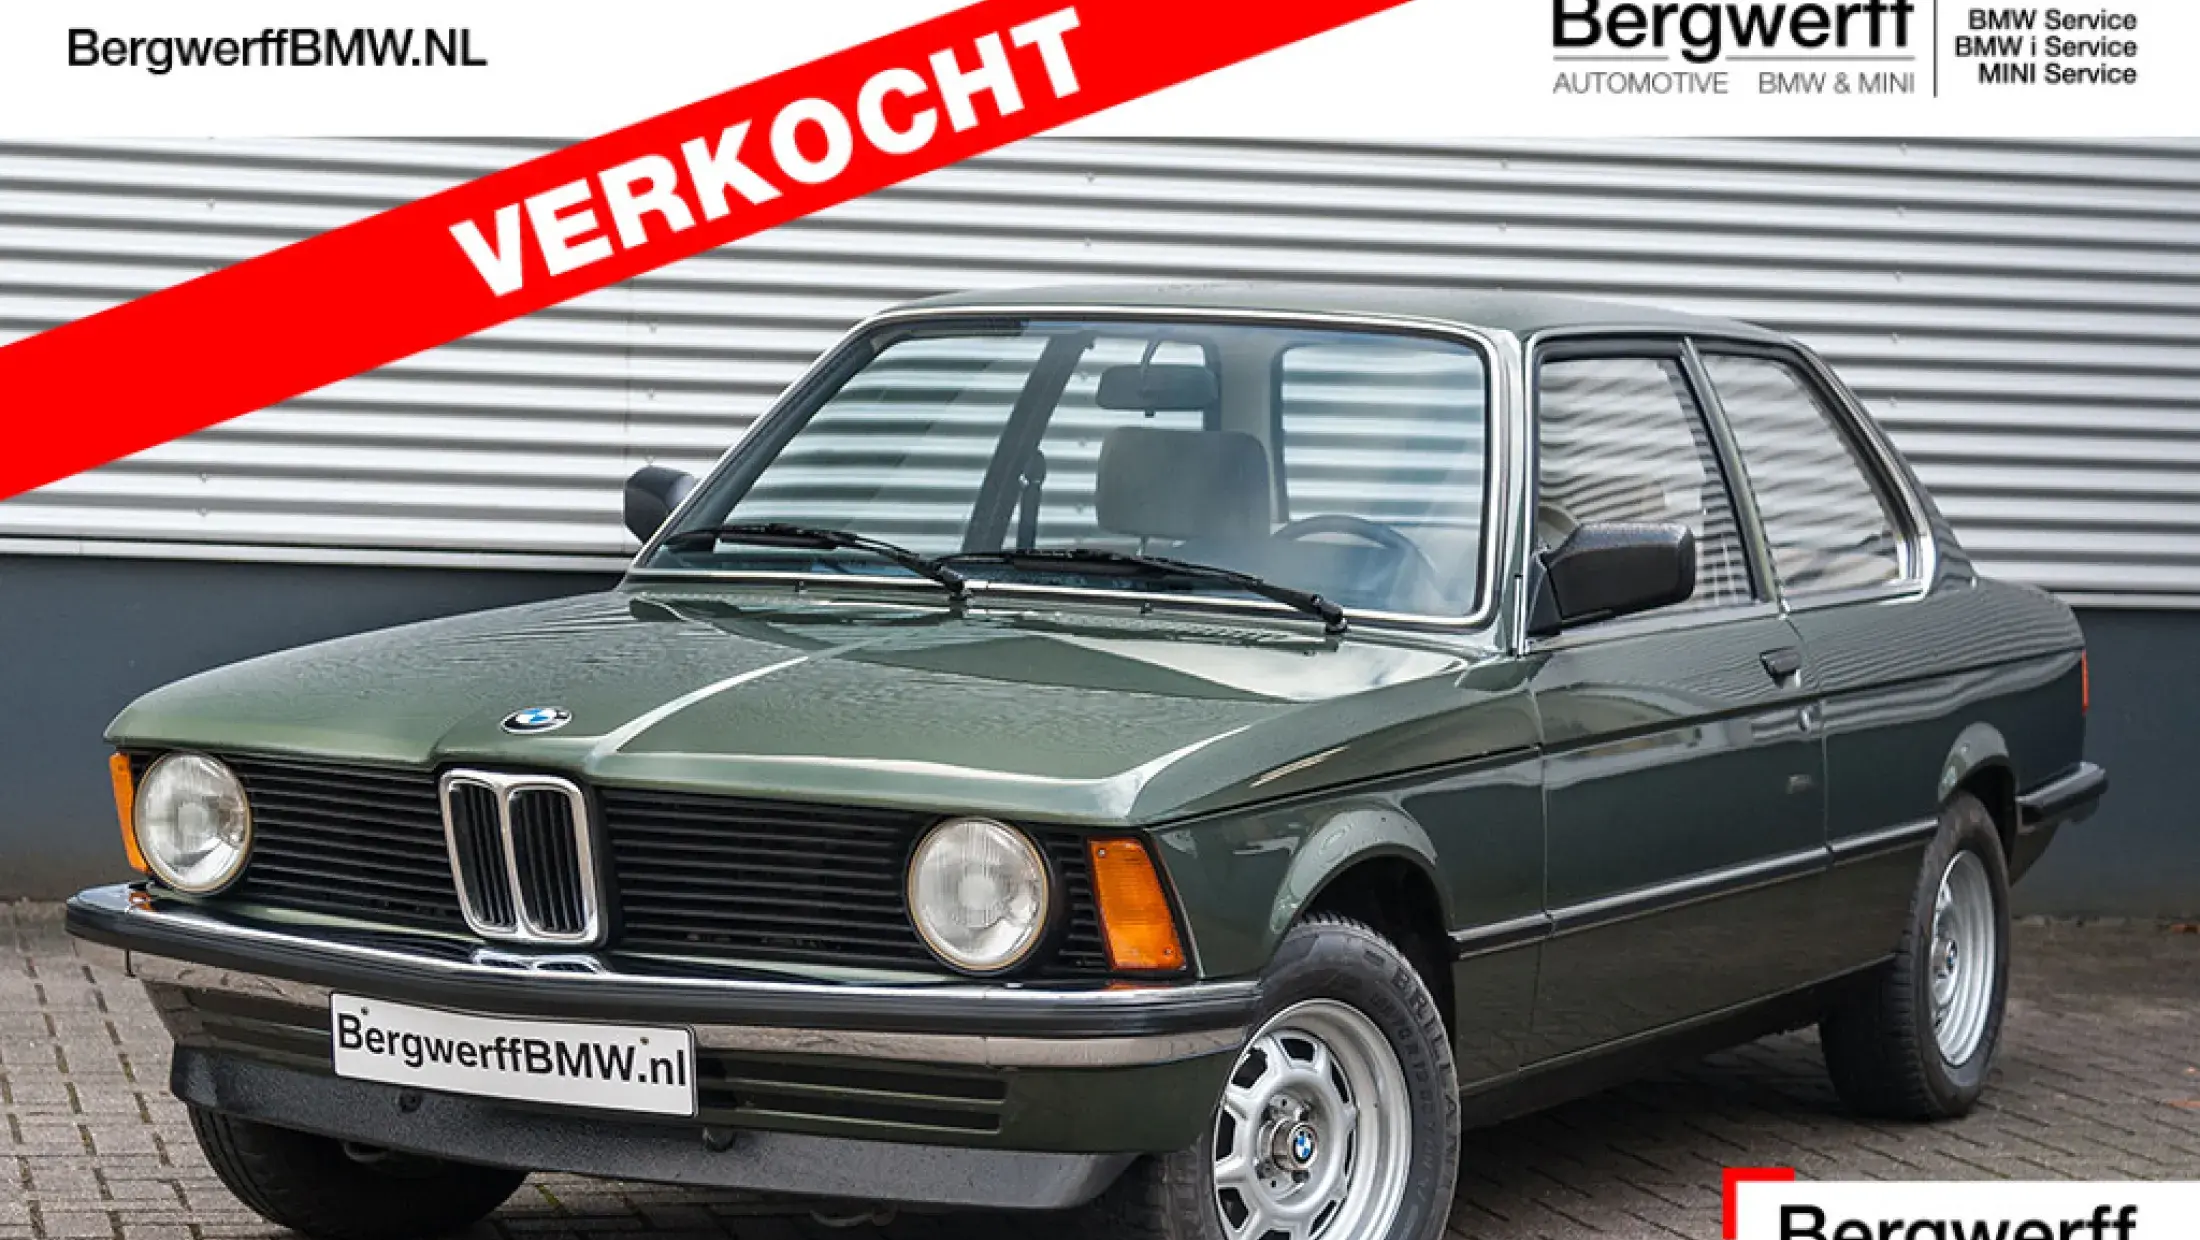 BMW E21 315 Oldtimer Handgeschakeld Zypressen Grün Metallic 1982 Bergwerff Classic